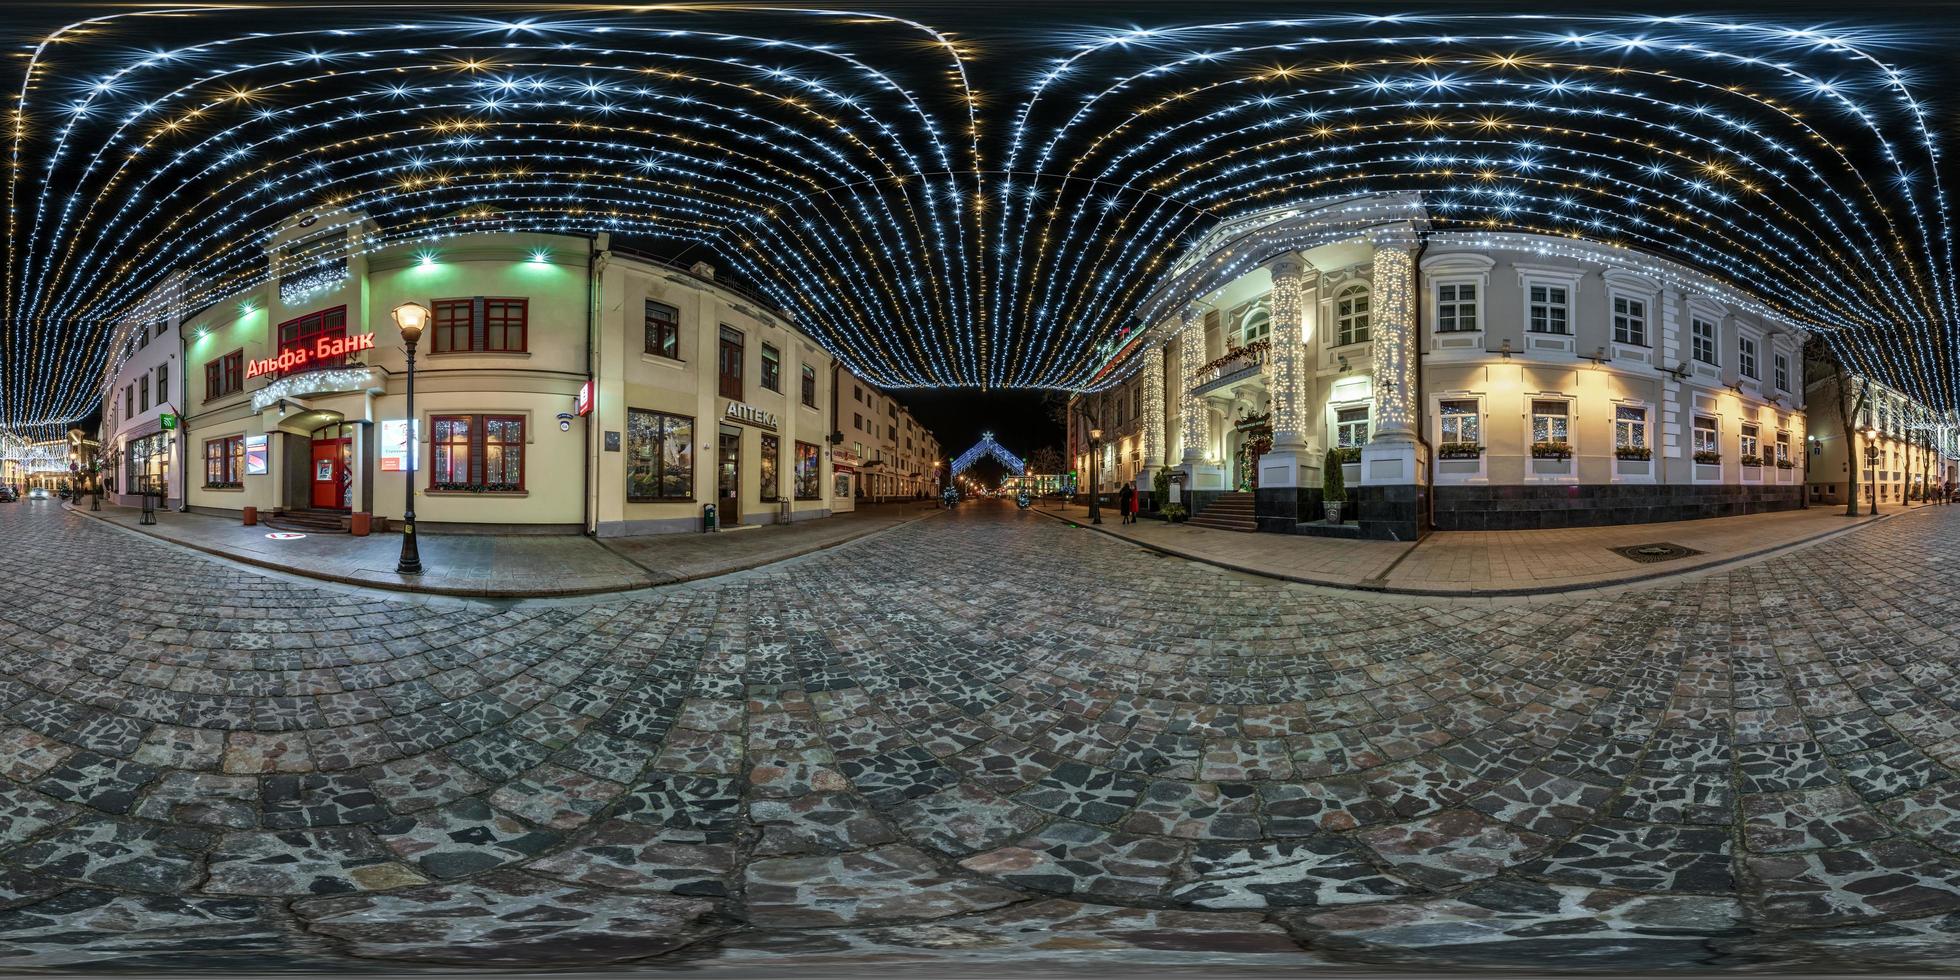 panorama esférico de noche transparente hdr 360 en calle peatonal con pavimento de piedra del casco antiguo con decoración festiva e iluminaciones en proyección equirectangular foto